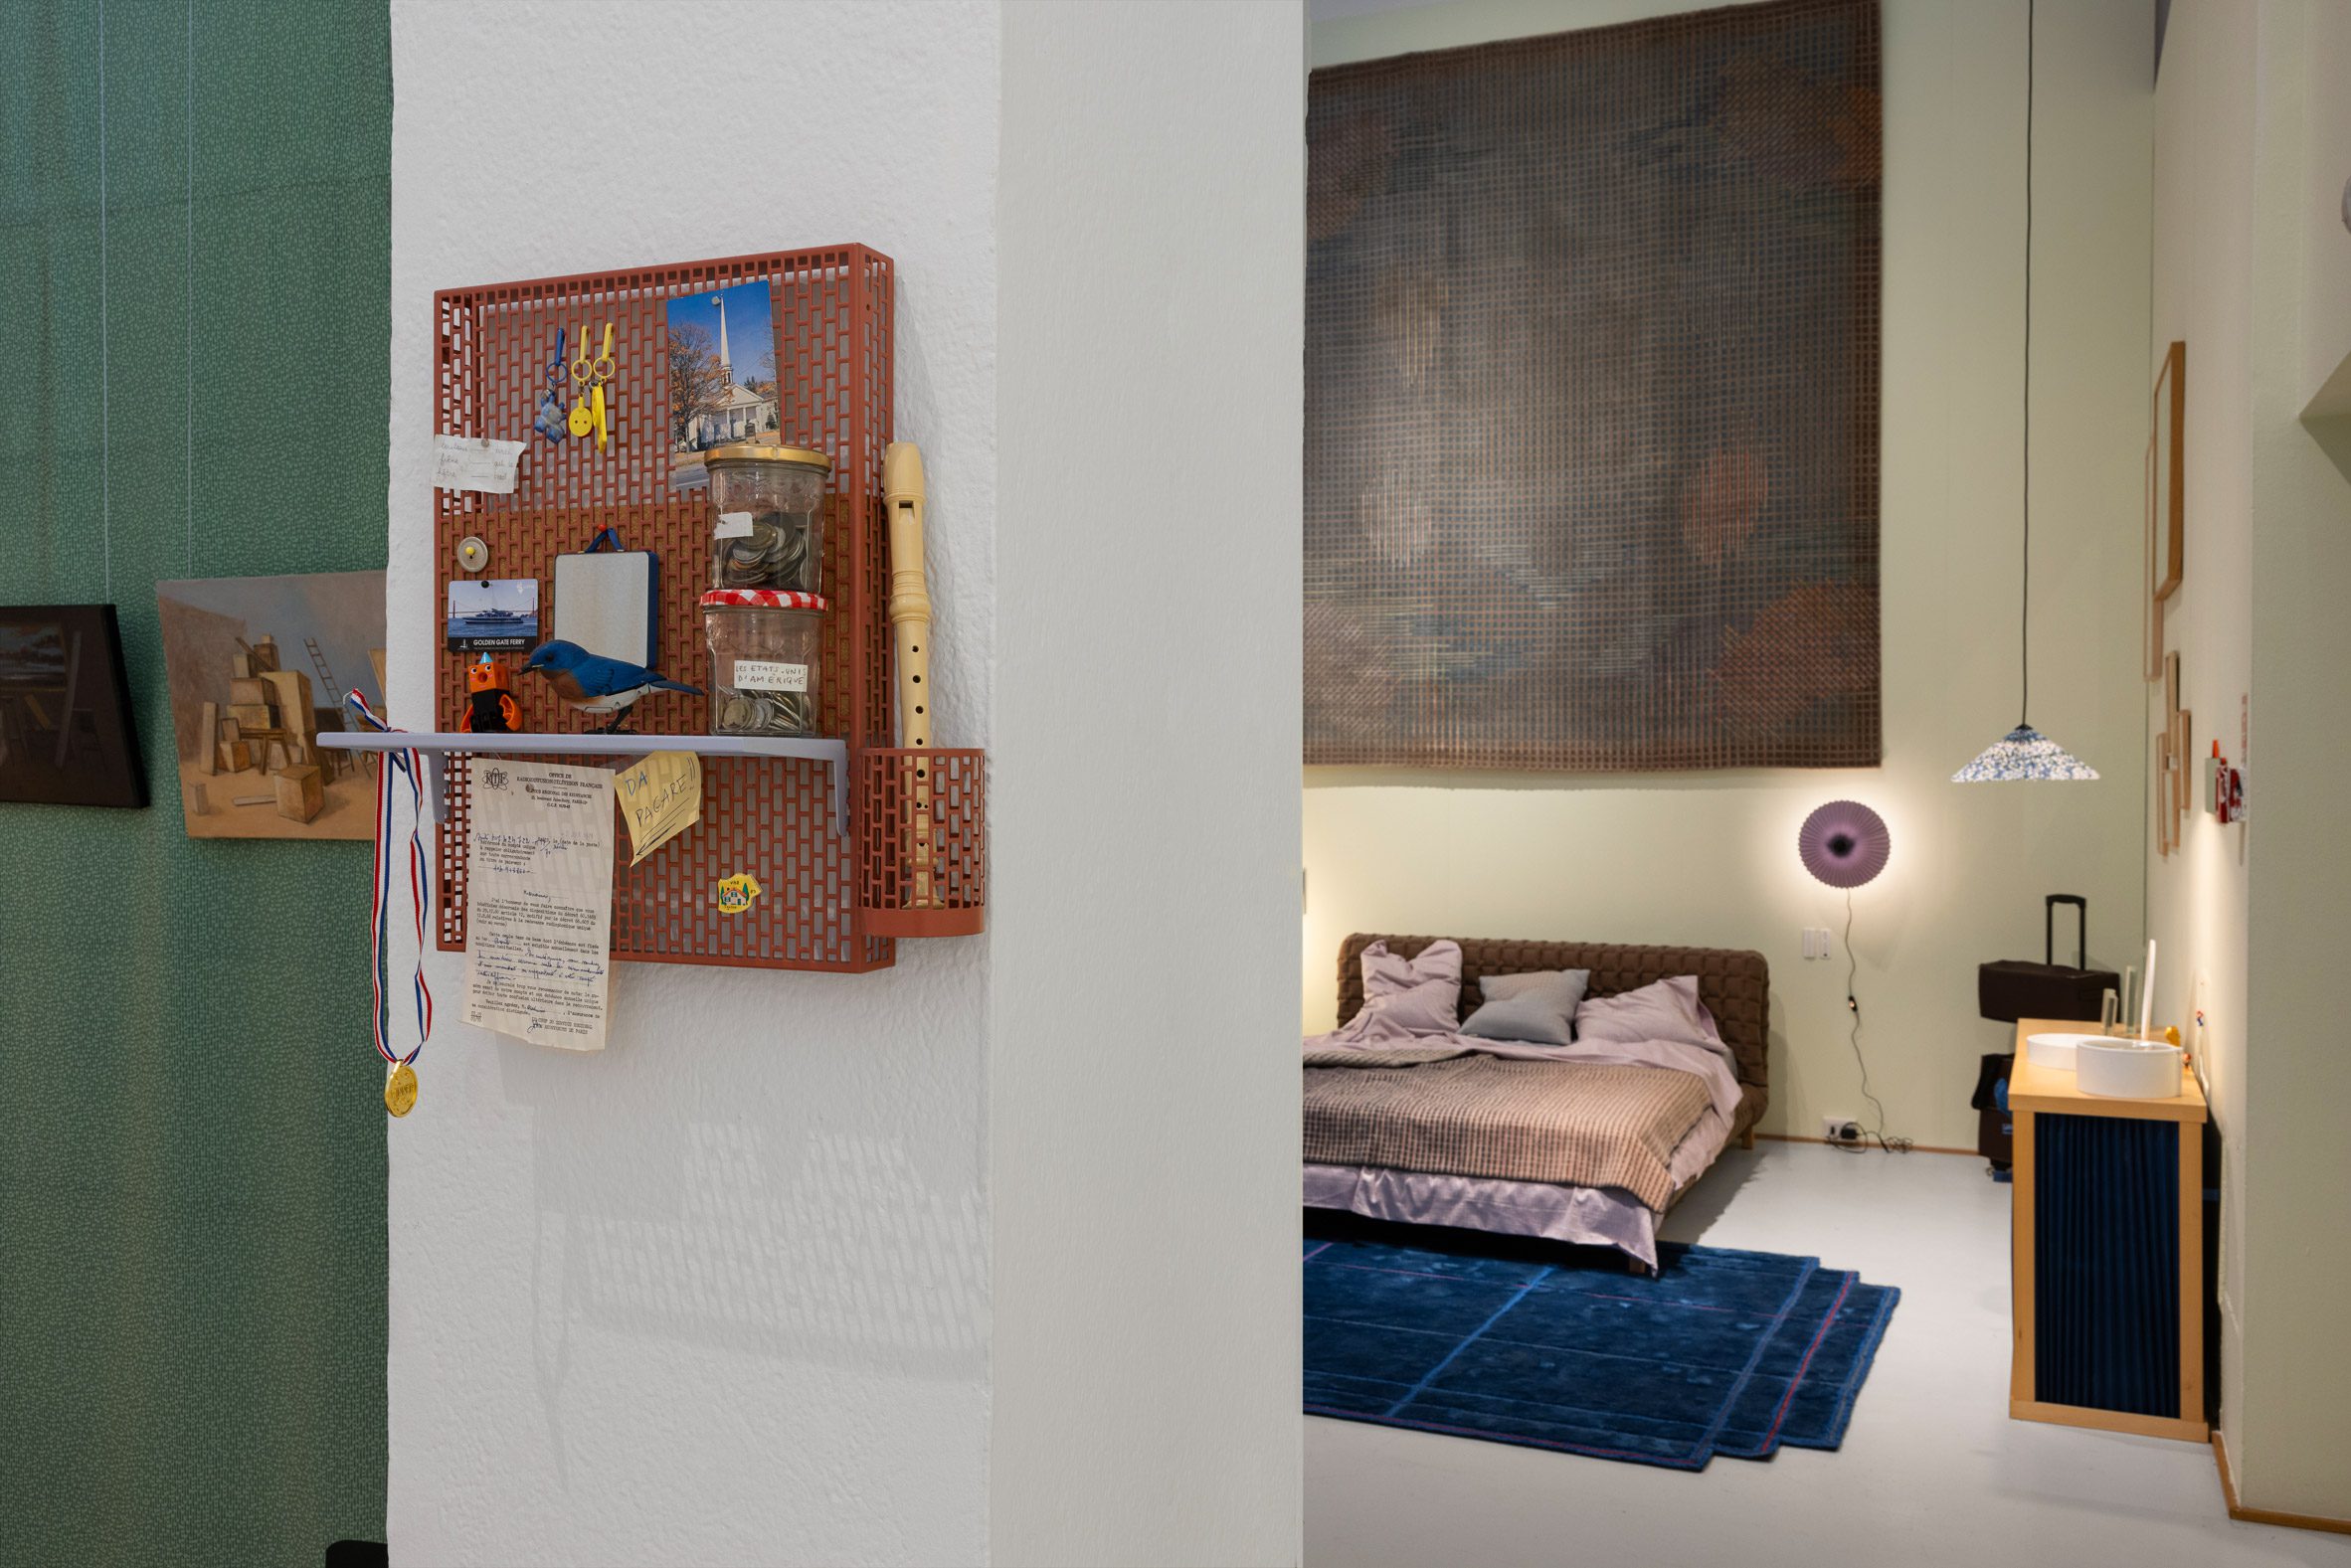 Bedroom by Inga Sempé at Triennale Milano